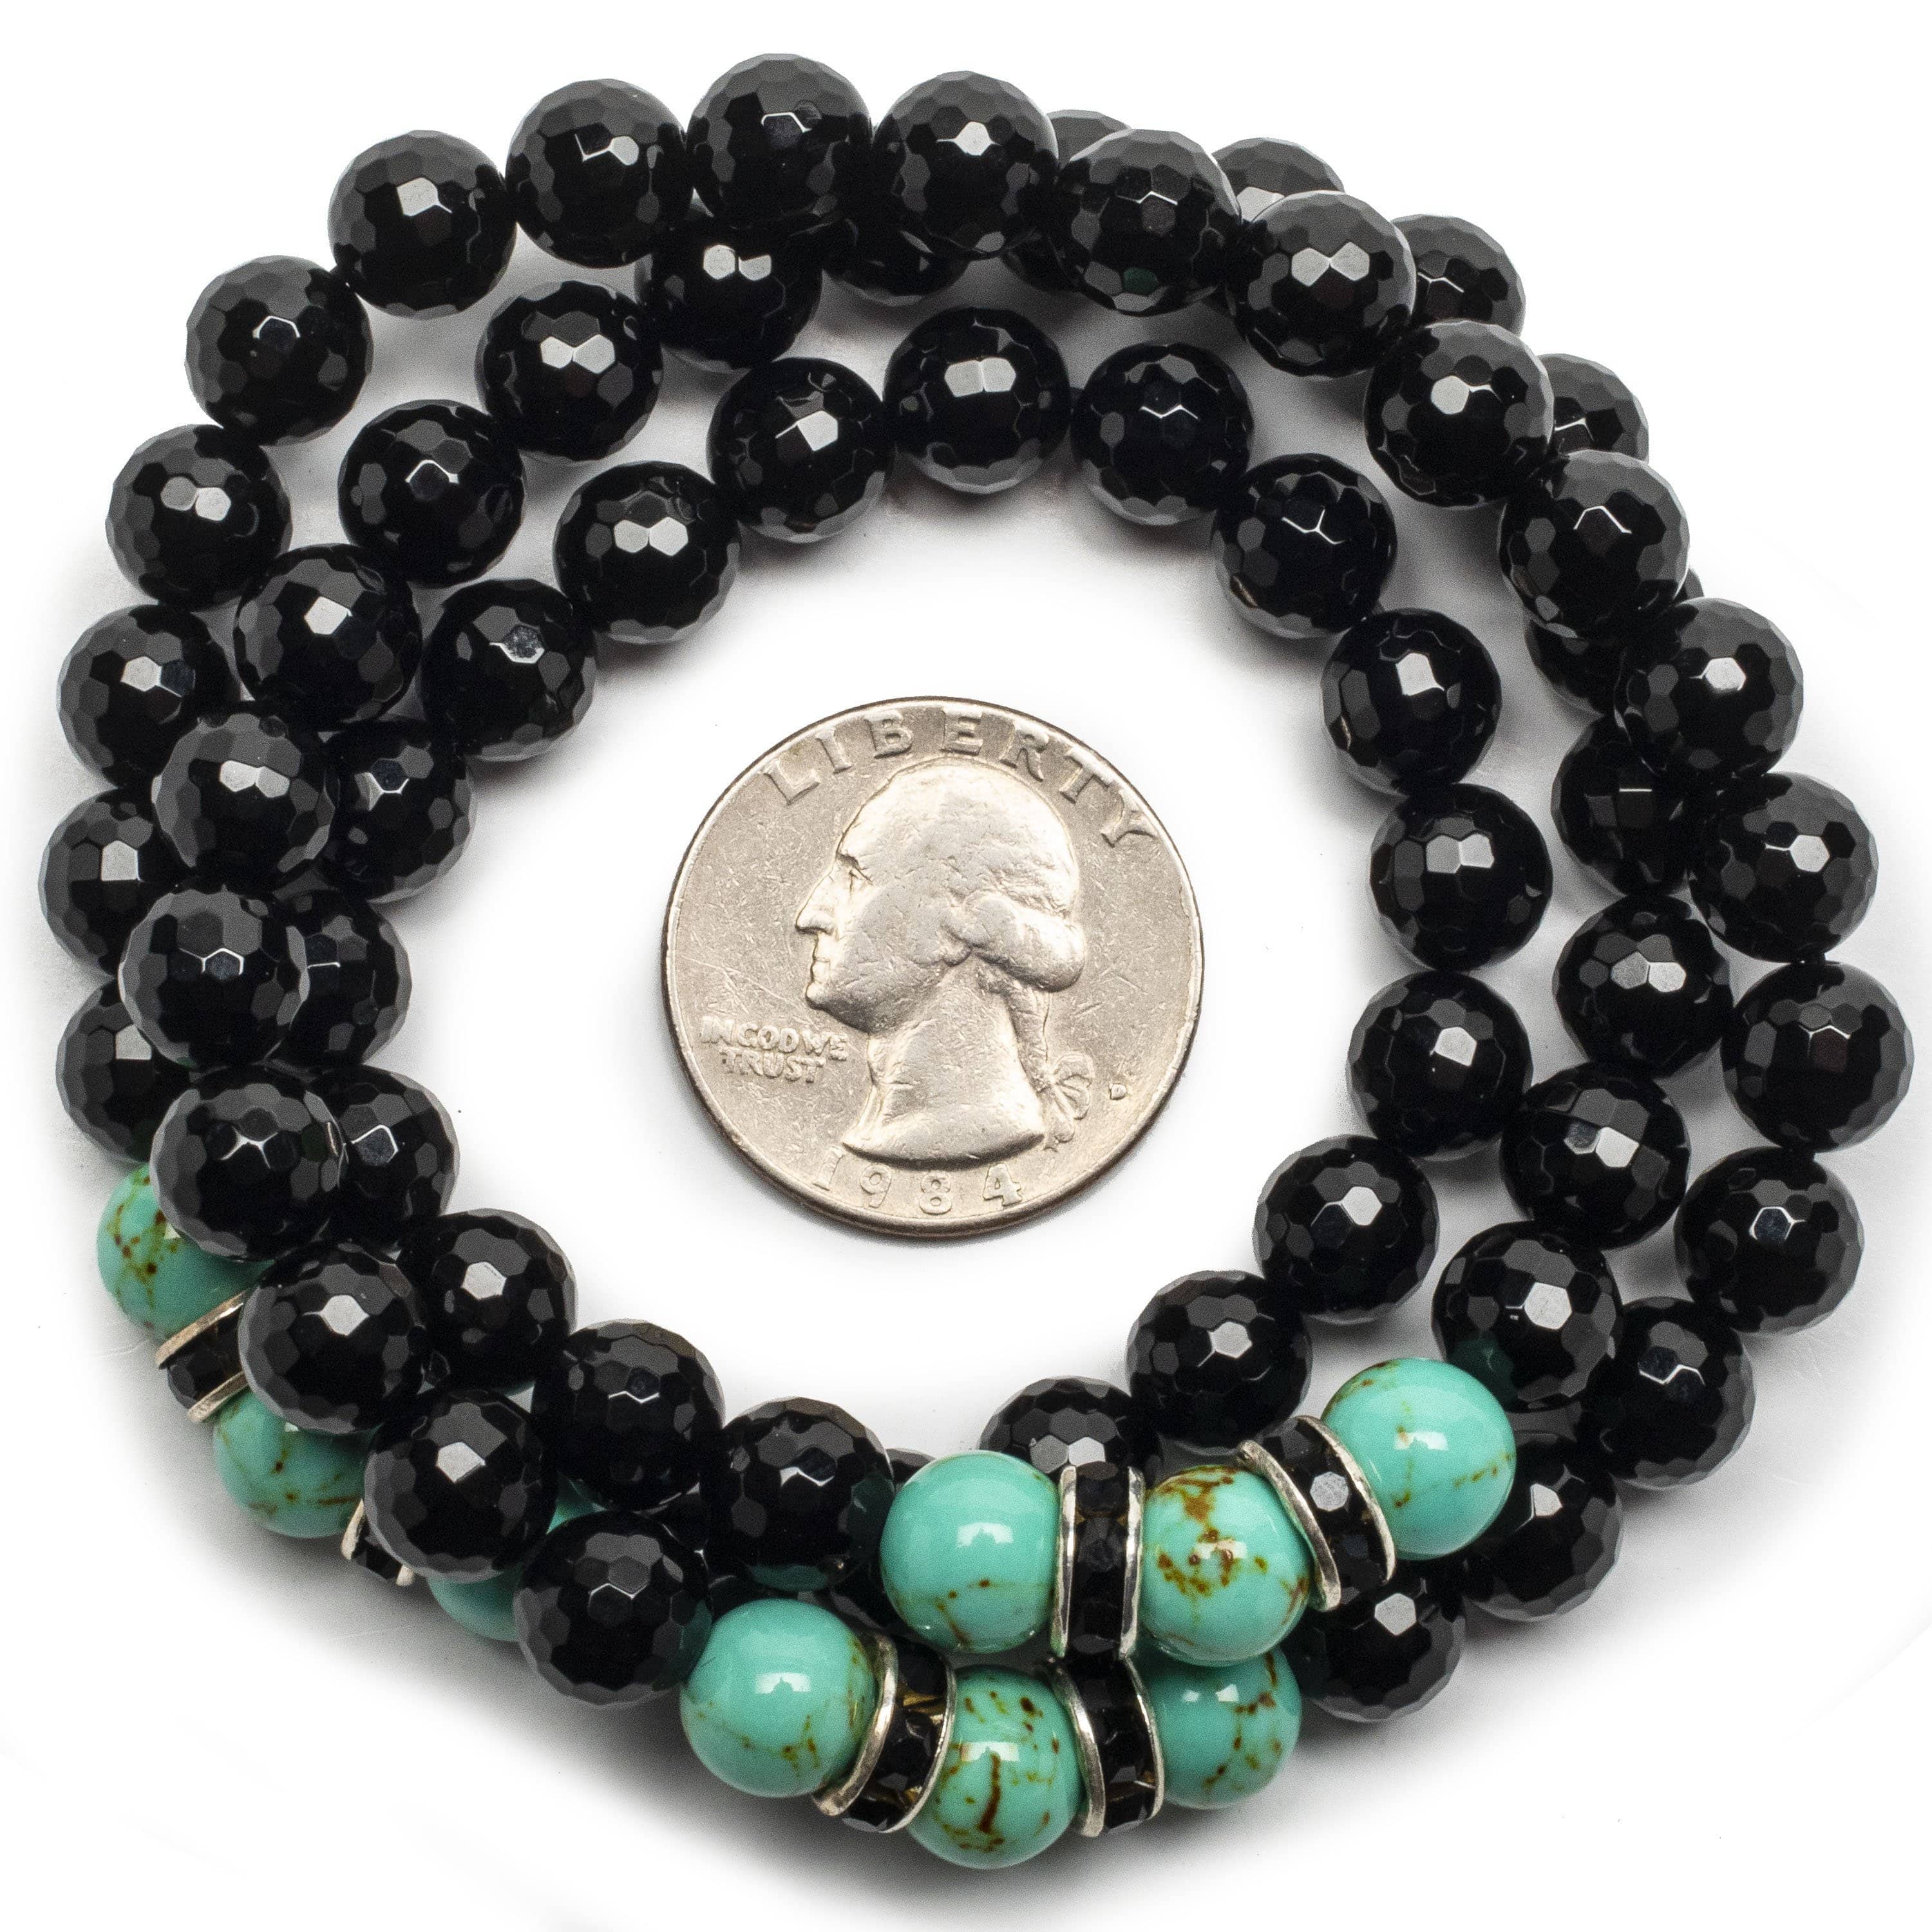 Kalifano Gemstone Bracelets Black Agate 8mm Beads with Howlite Turquoise and Crystal Accent Beads Triple Wrap Elastic Gemstone Bracelet WHITE-BGI3-015